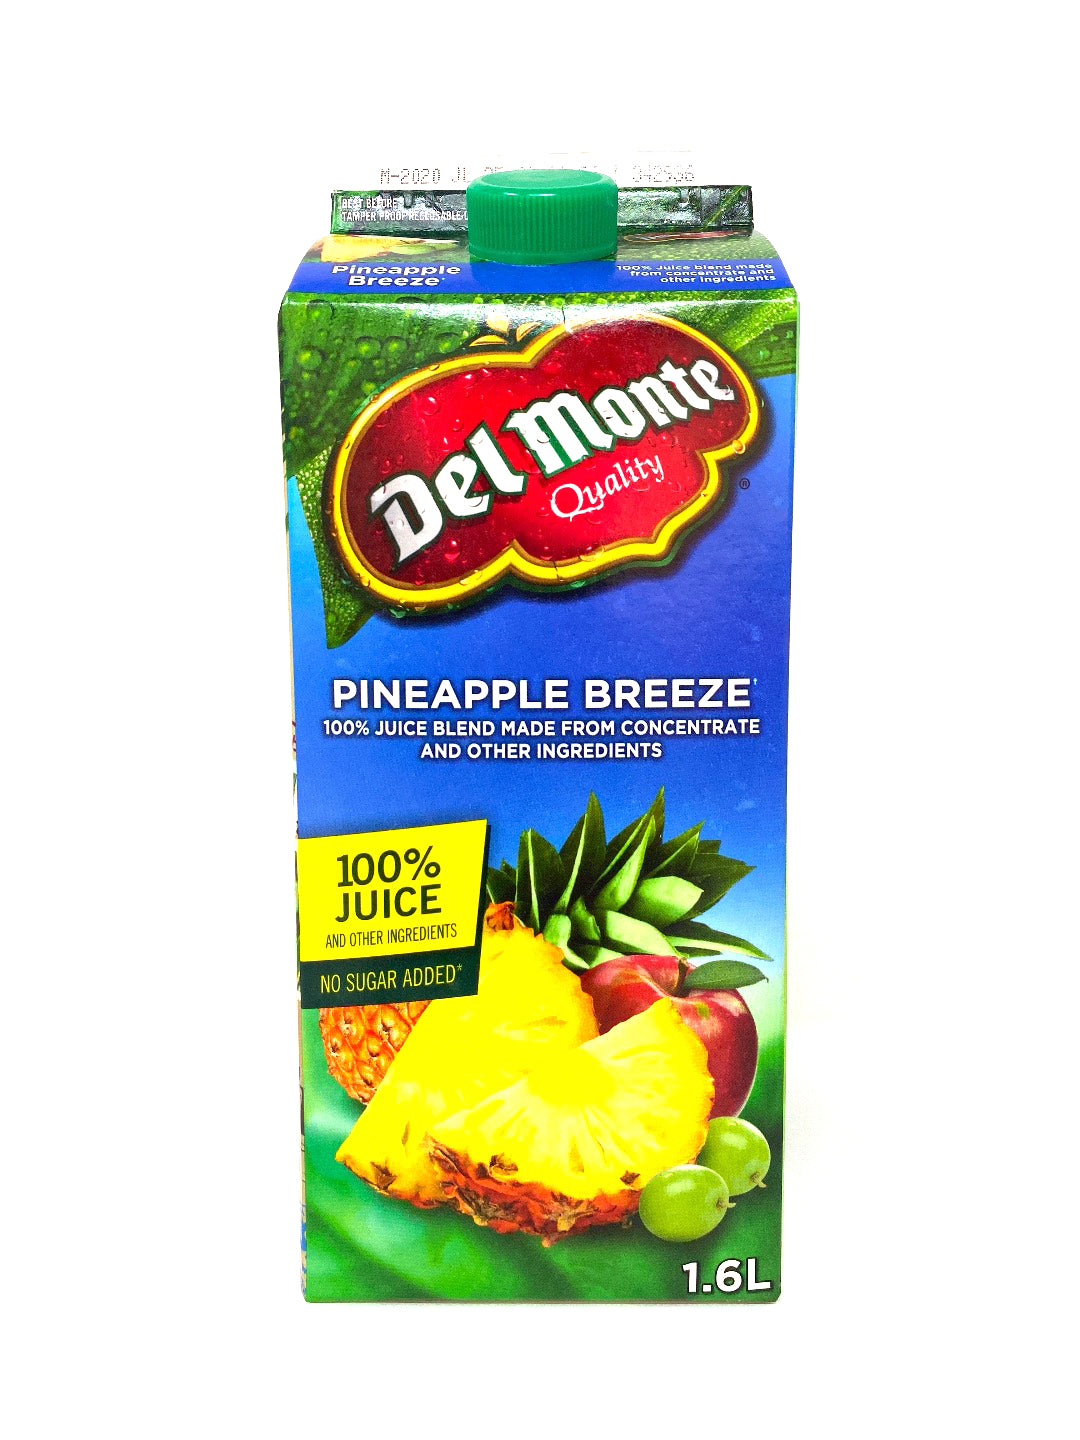 Del Monte Pineapple Breeze